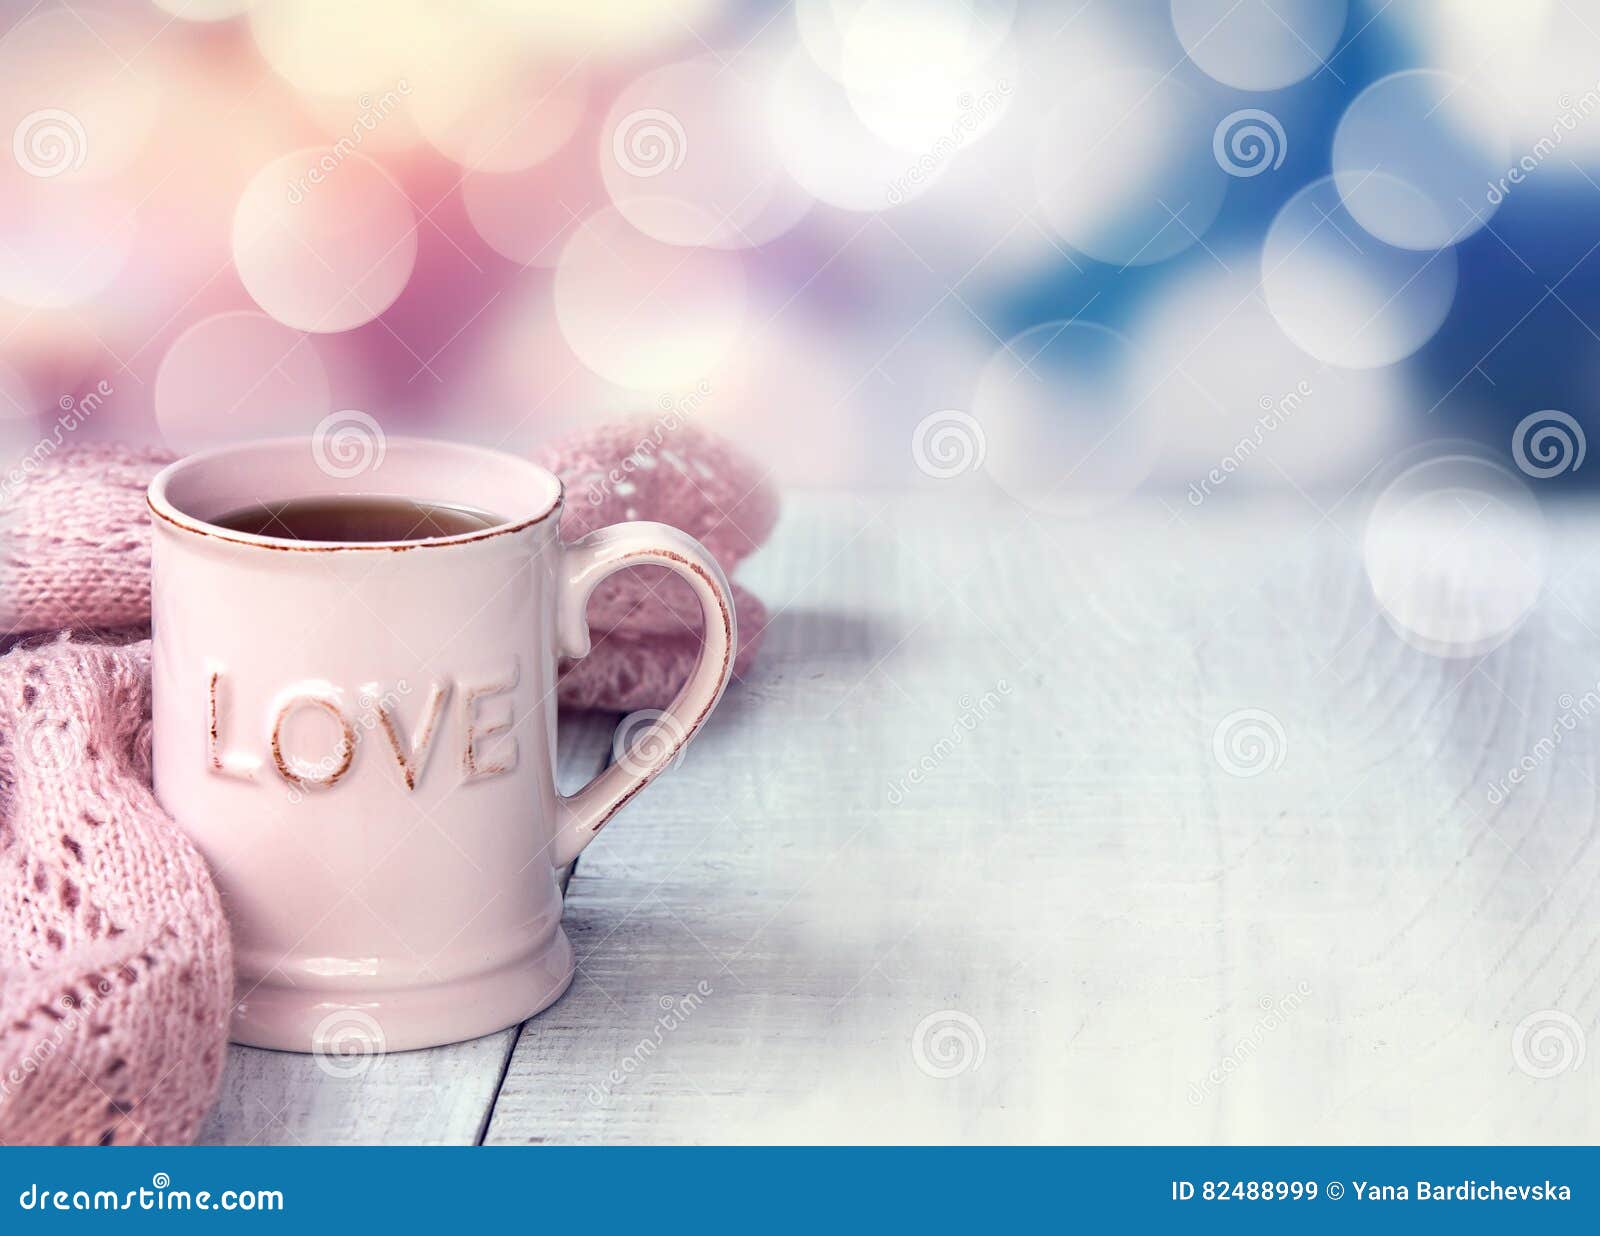 Mug on Wooden Table Valentine`s Day Holiday Background. Stock Image - Image  of life, evening: 82488999